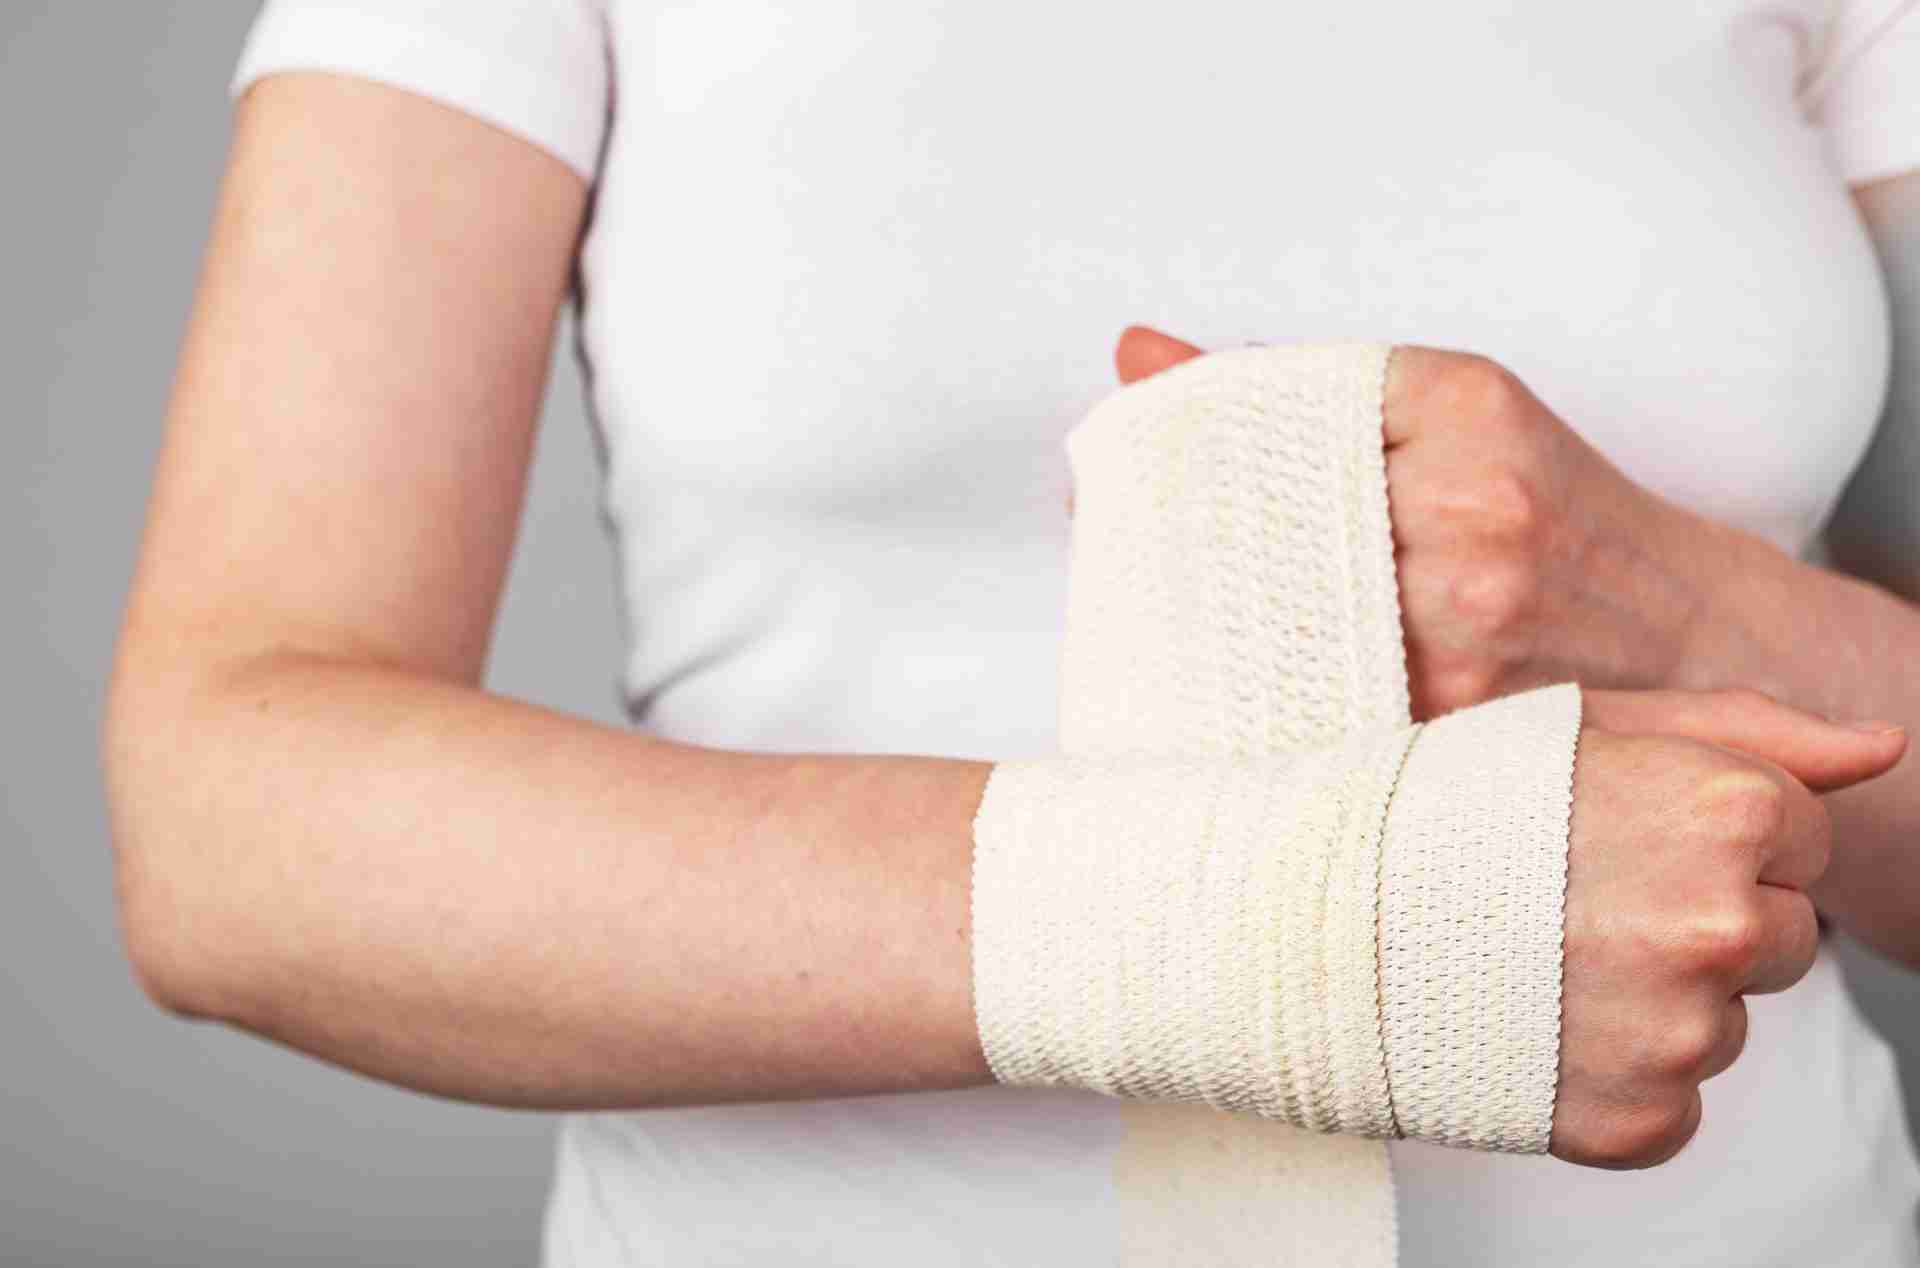 Close up image of woman applying elastic tape bandage to her injured wrist.